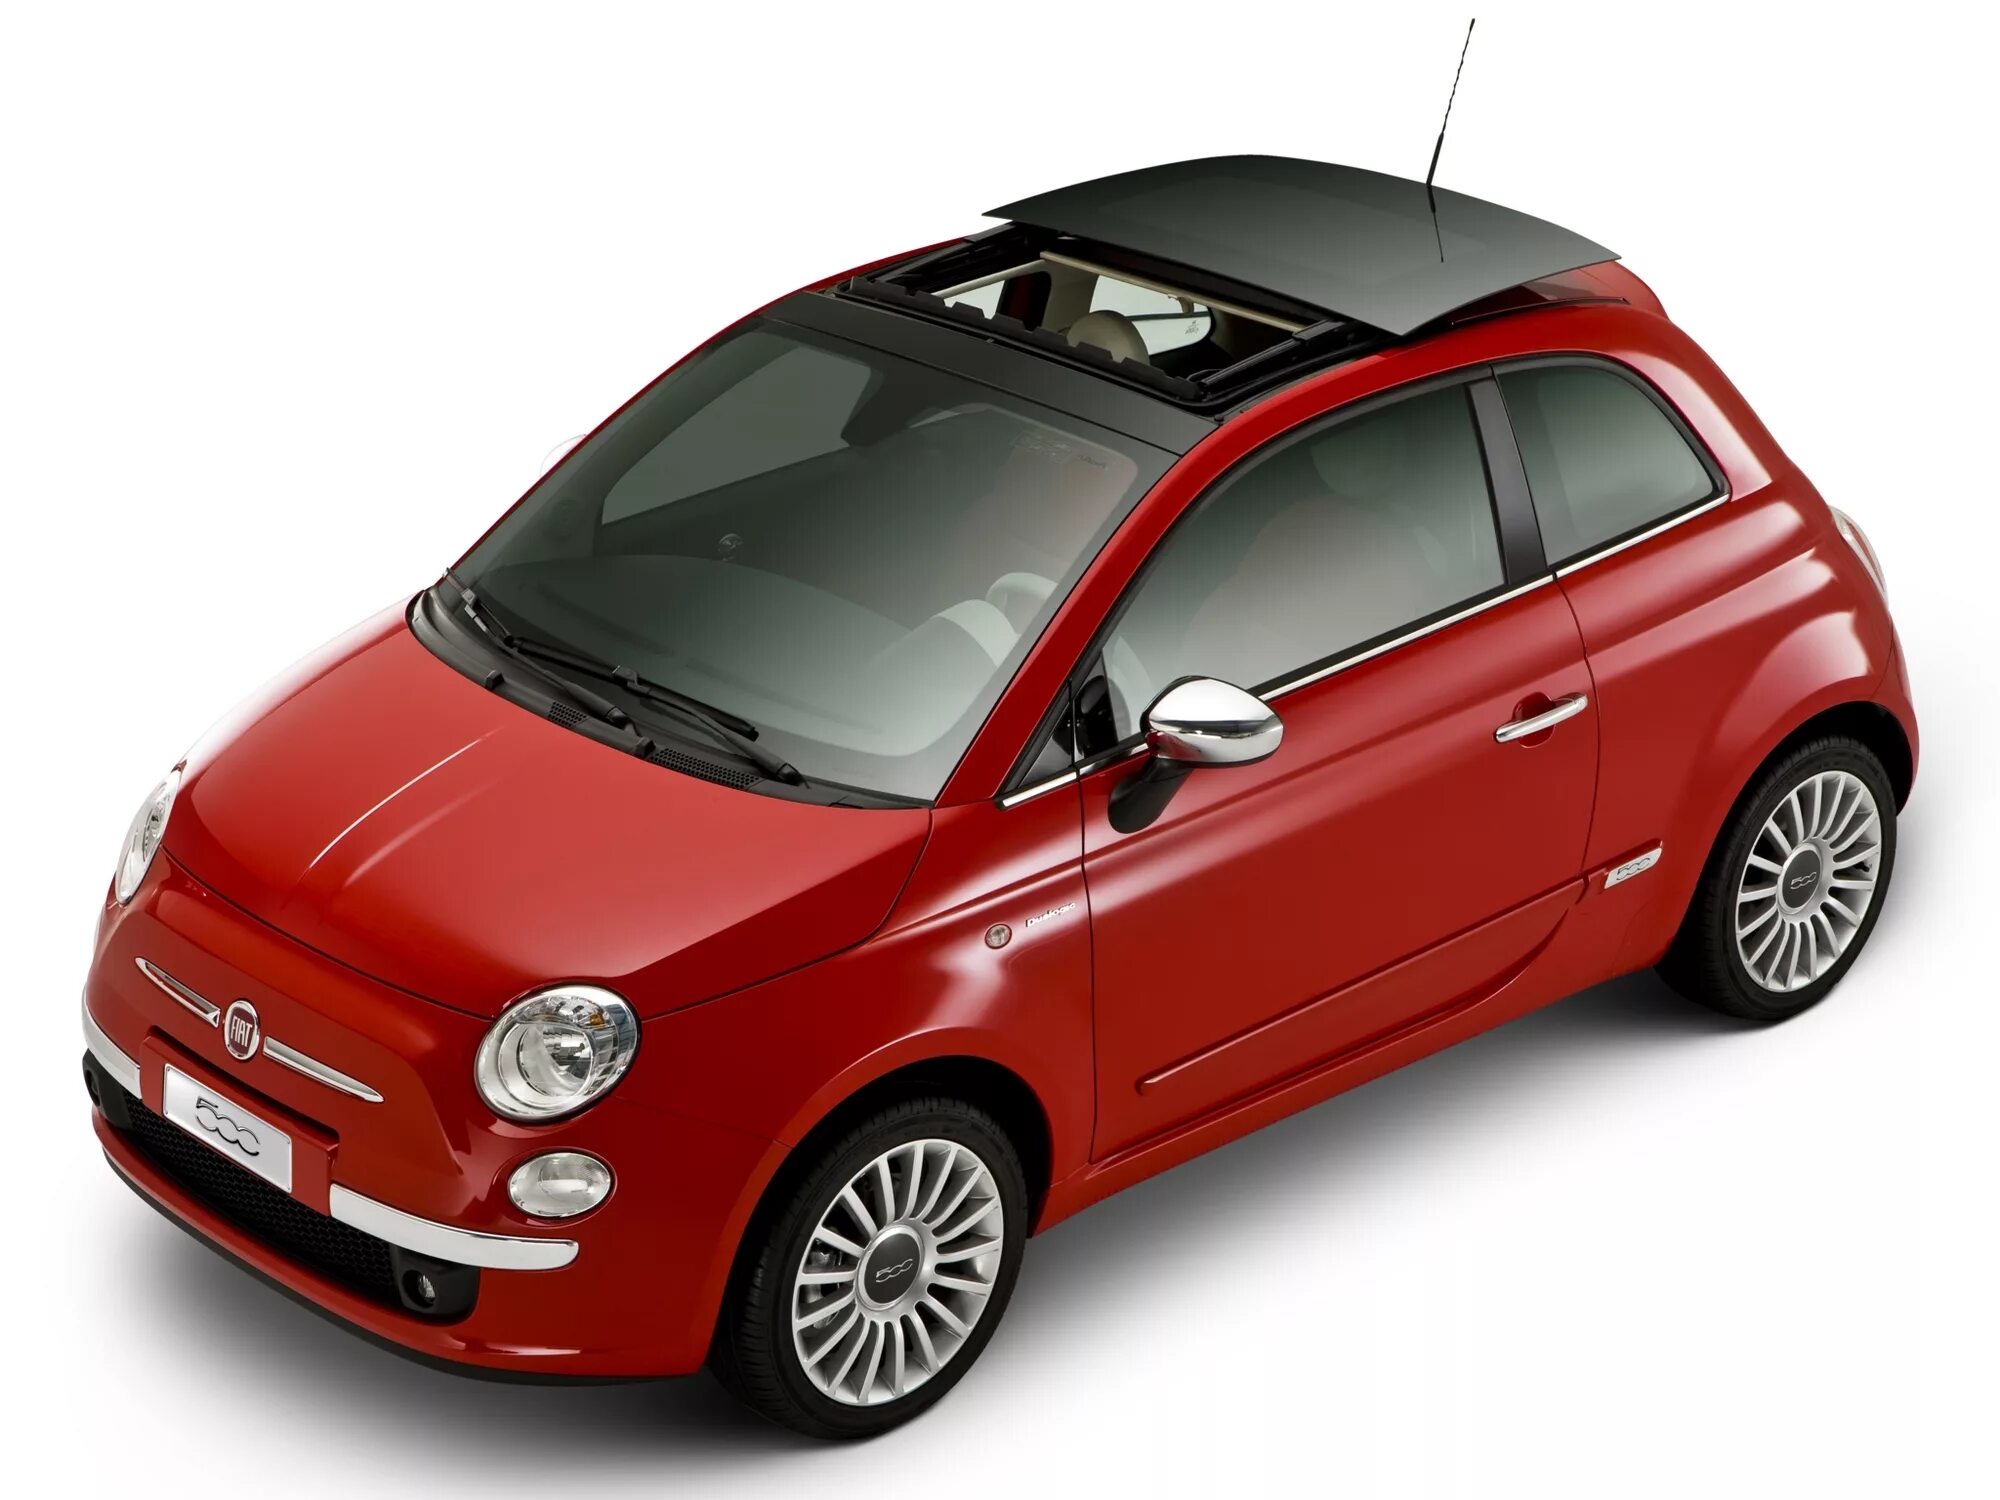 Купить фиат в беларуси. Fiat 500 (2007). Fiat 500 3d (312) 2007. Fiat 510. Fiat 500 (2007) фото.